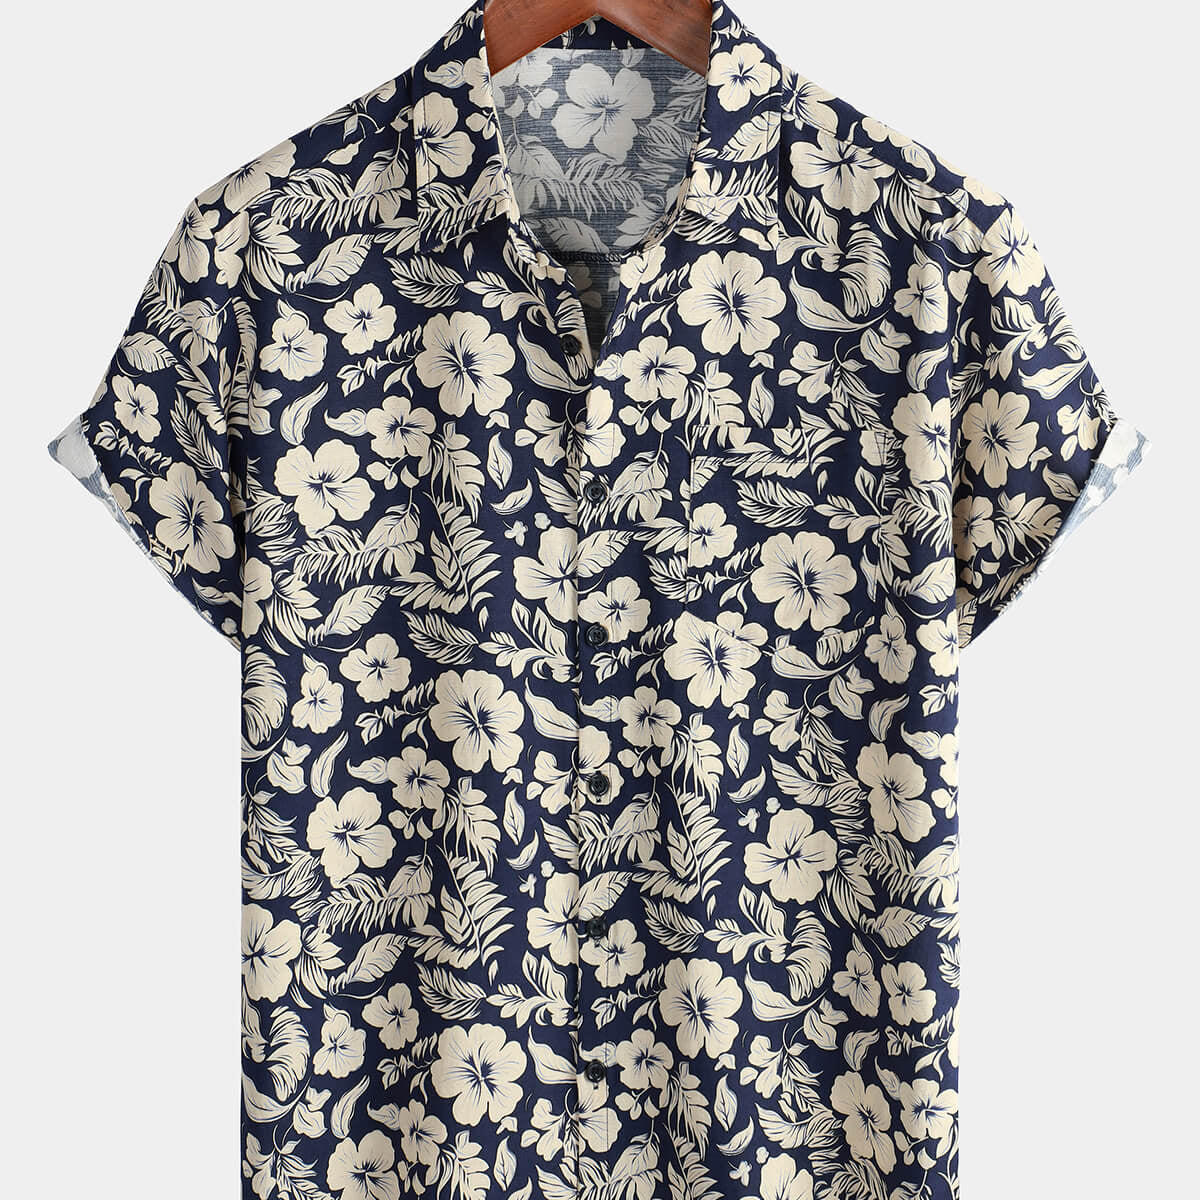 Men's Navy Blue Hawaiian Floral Holiday Casual Summer Short Sleeve Button Up Shirt